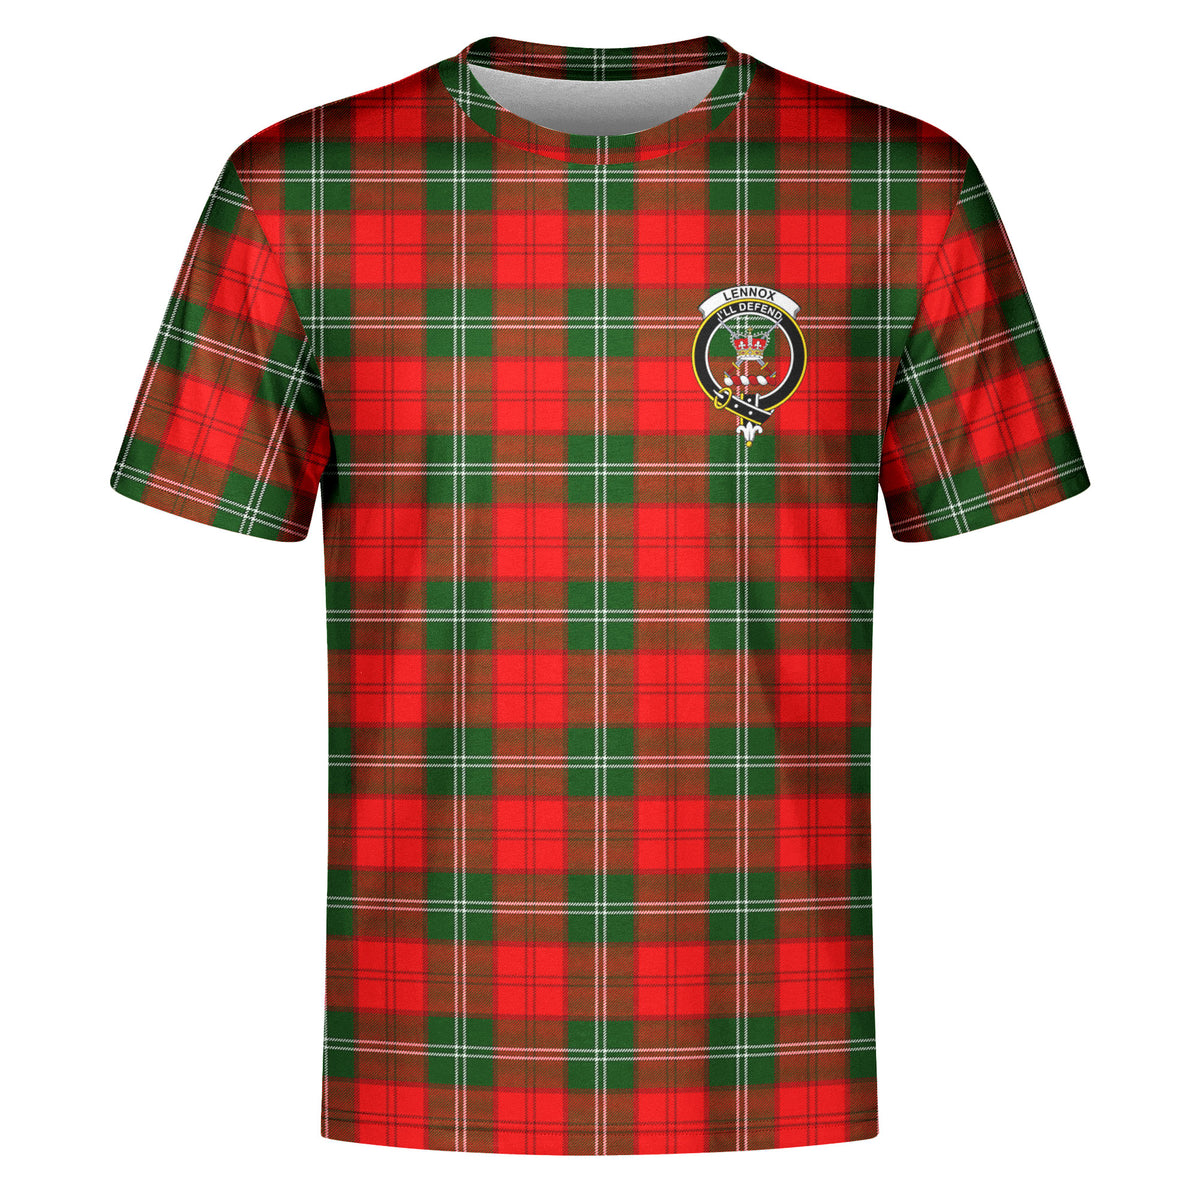 Lennox (Lennox Kincaid) Tartan Crest T-shirt